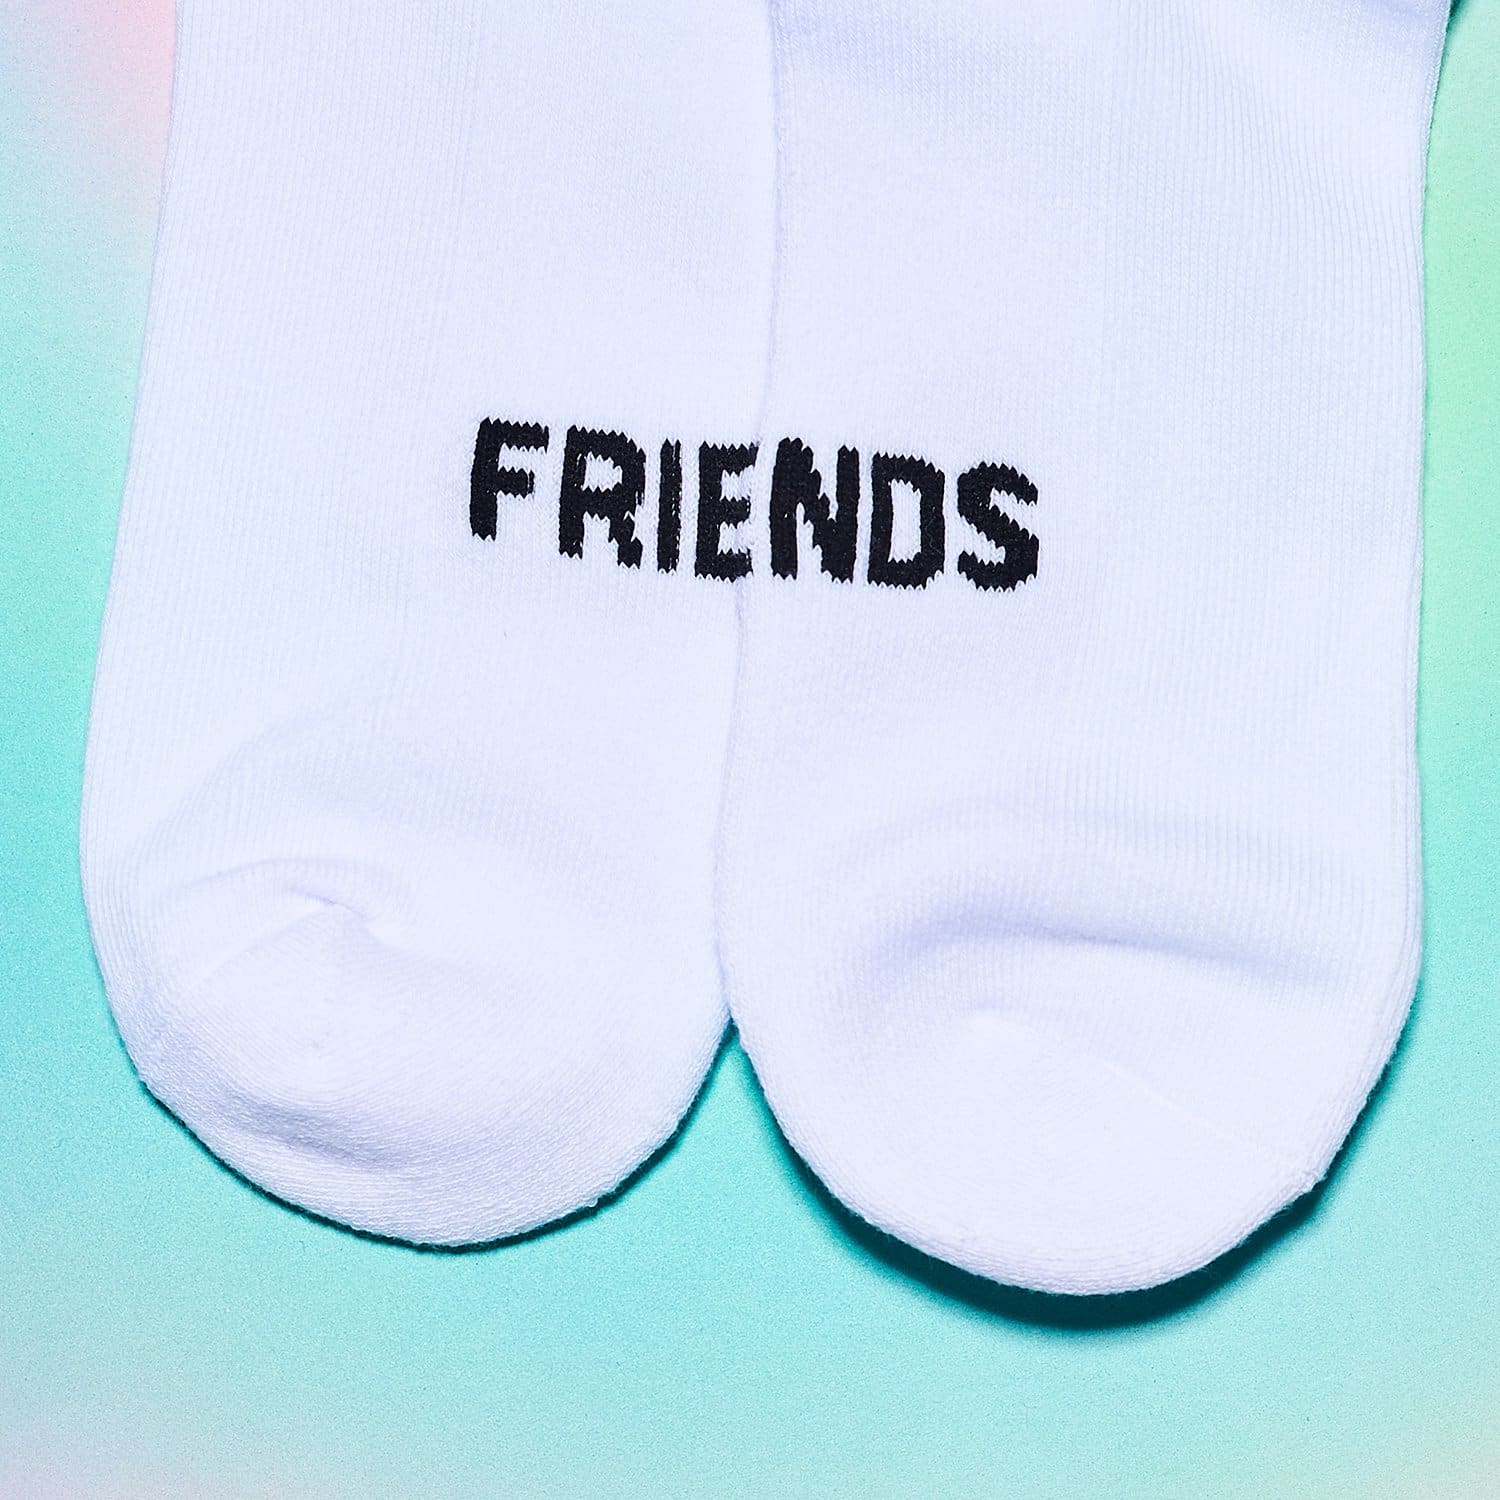 Friends Stoner Socks 420 - Season - Athletic Socks - Tube - 